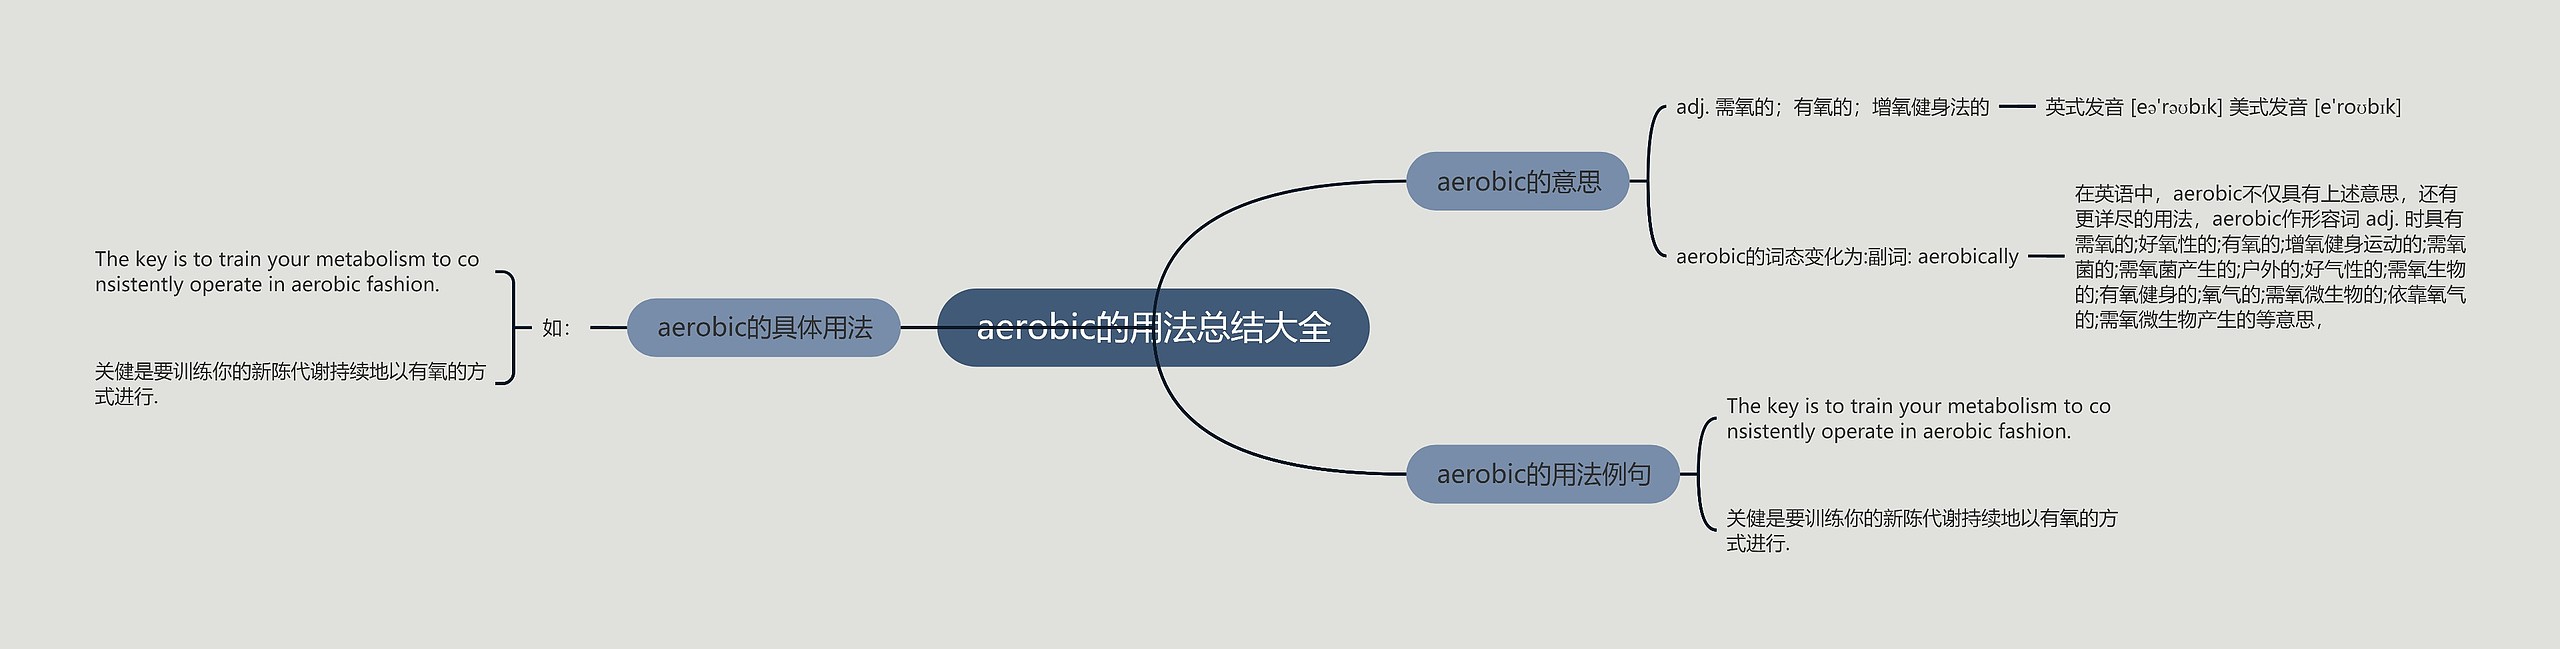 aerobic的用法总结大全思维导图